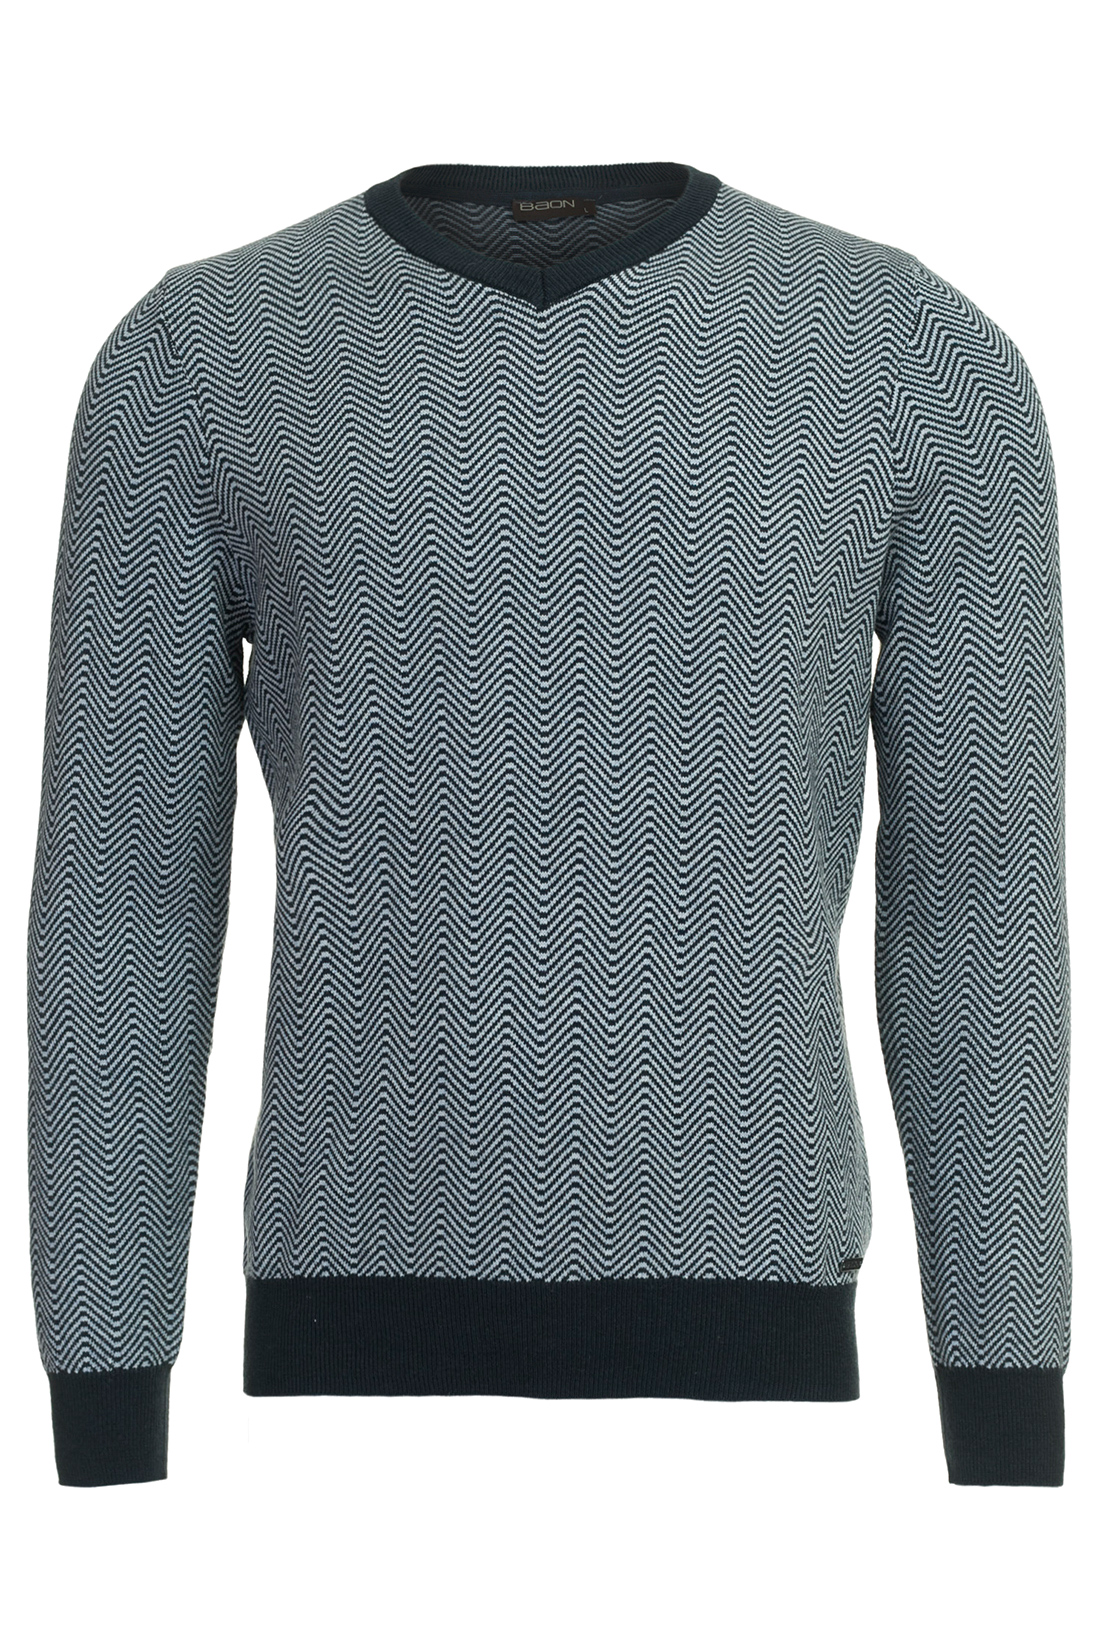 Пуловер с твидовым узором (арт. baon B637009), размер XXL, цвет синий Пуловер с твидовым узором (арт. baon B637009) - фото 4